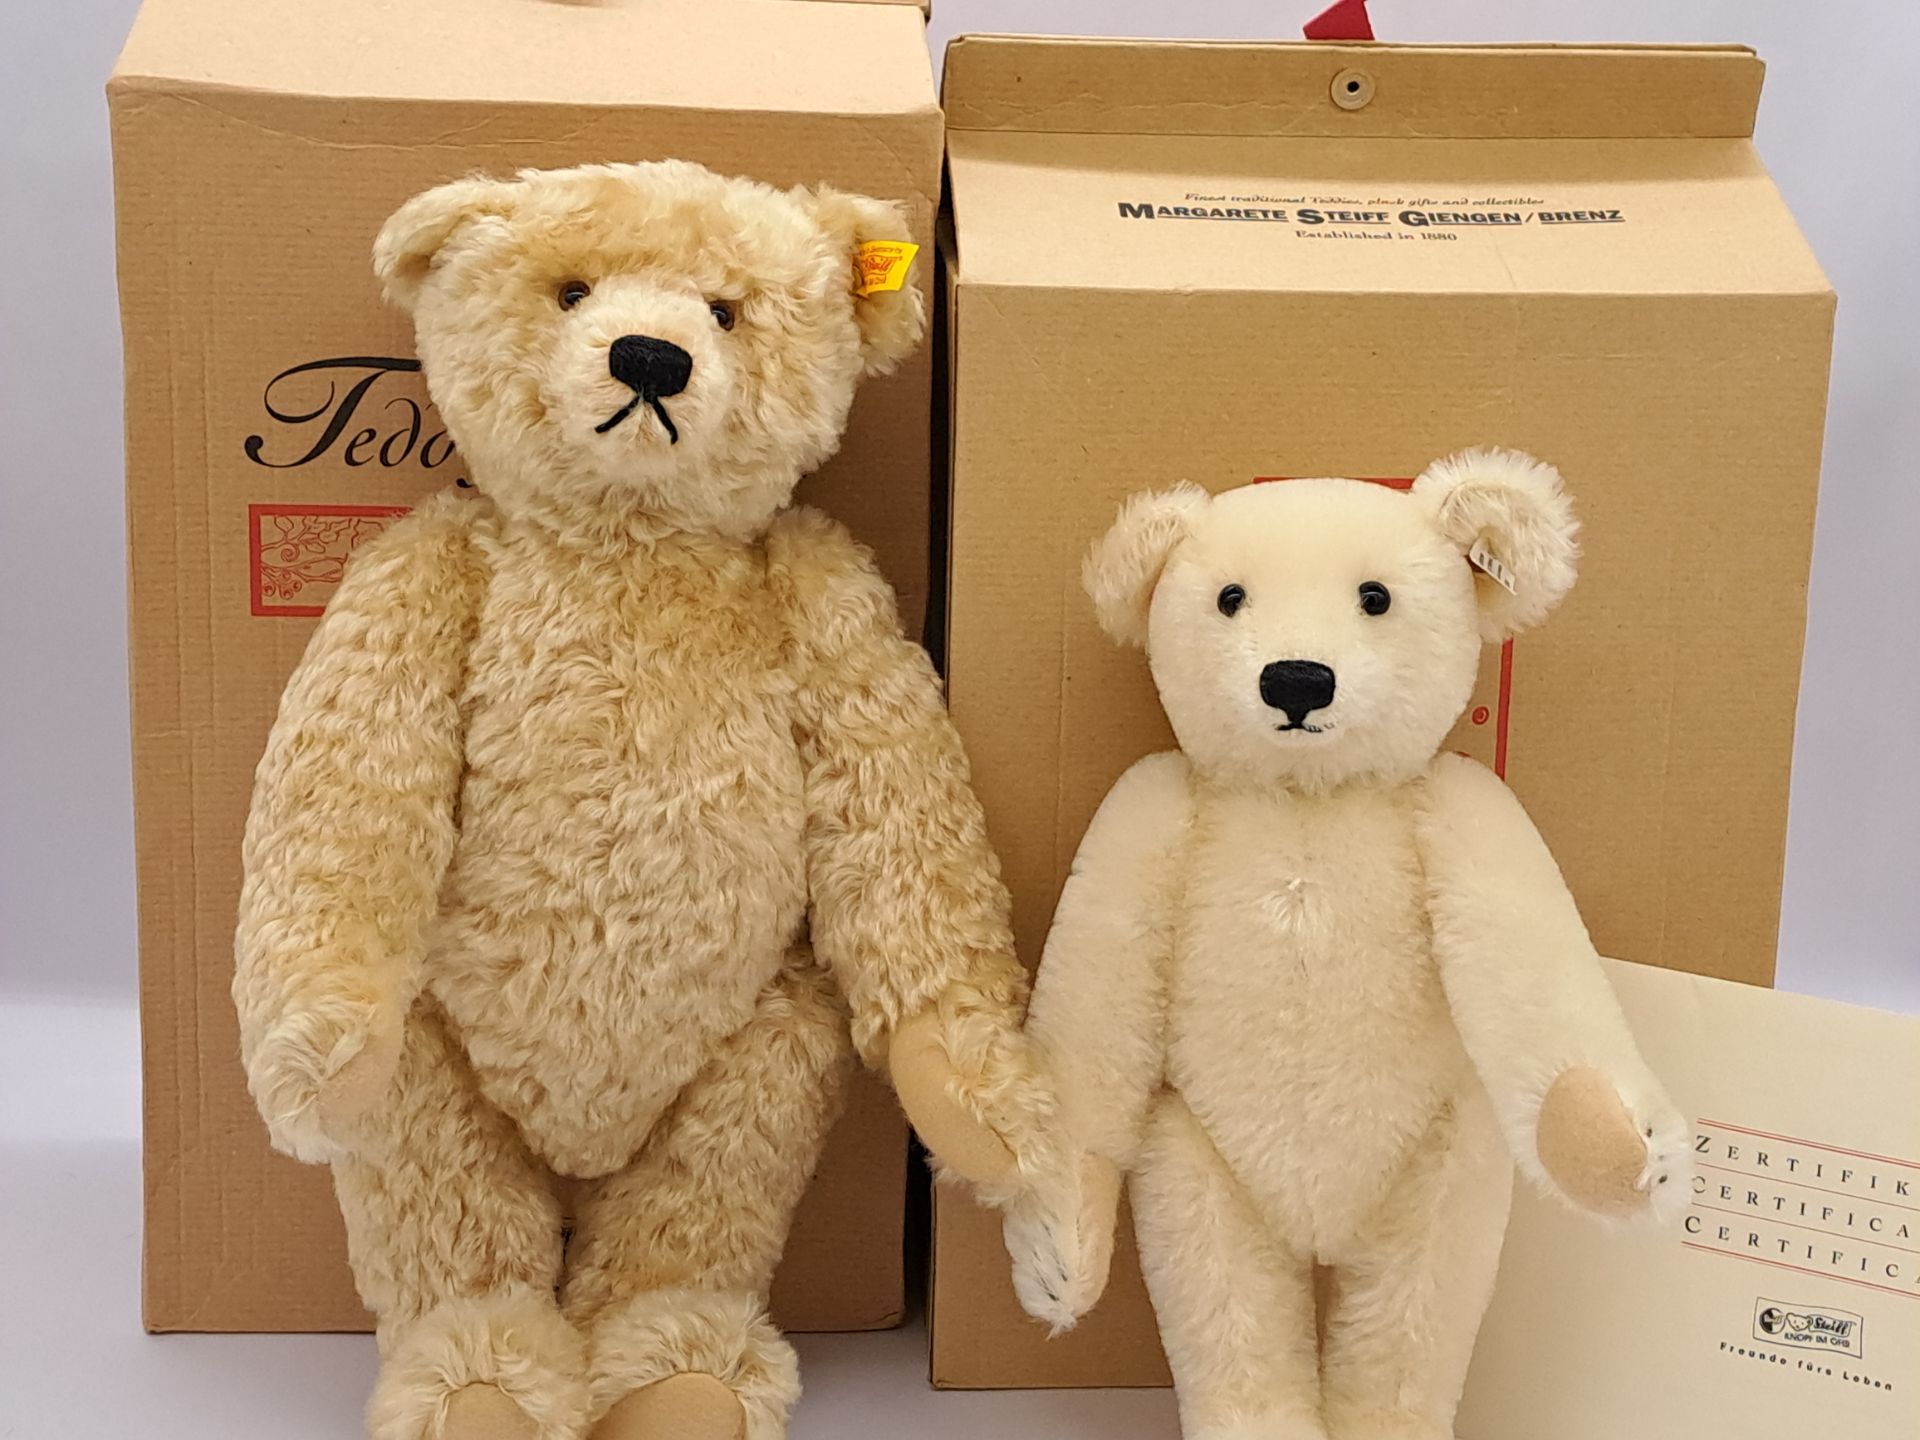 Steiff pair of bears (1) 1920 Classic replica teddy bear; (2) 1922 replica teddy bear